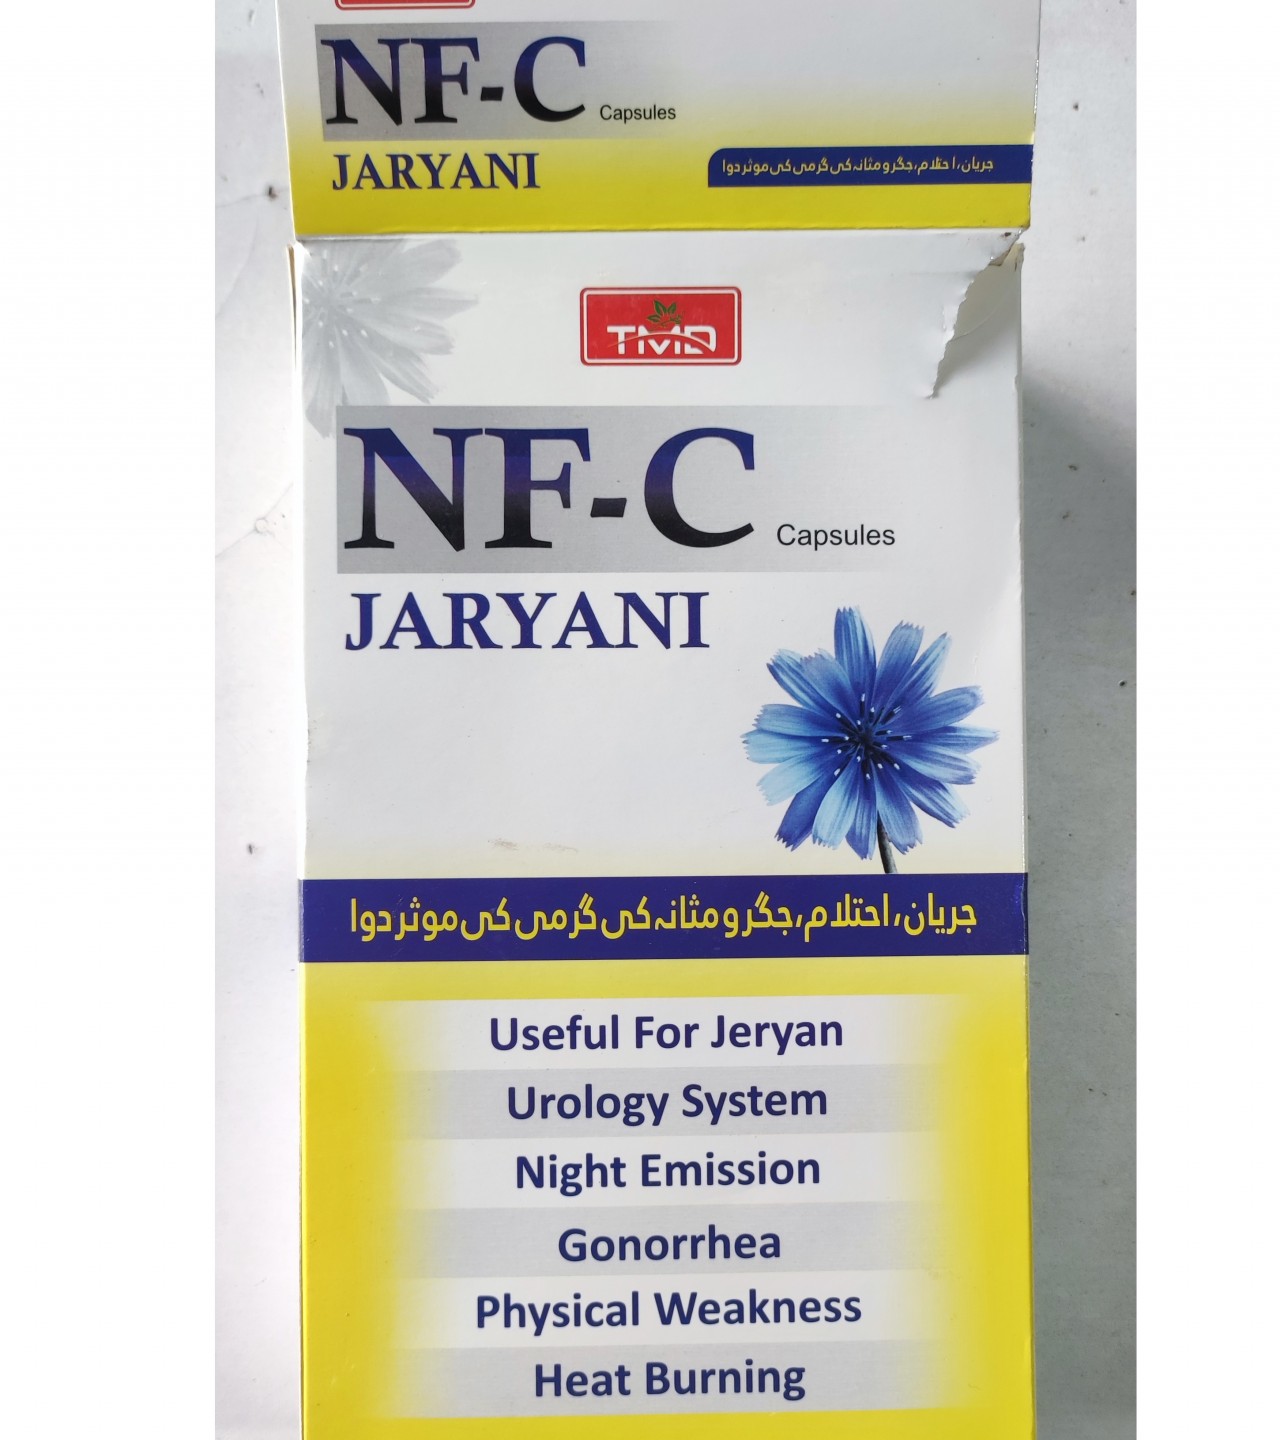 NF-C JARYANI CAPSULES